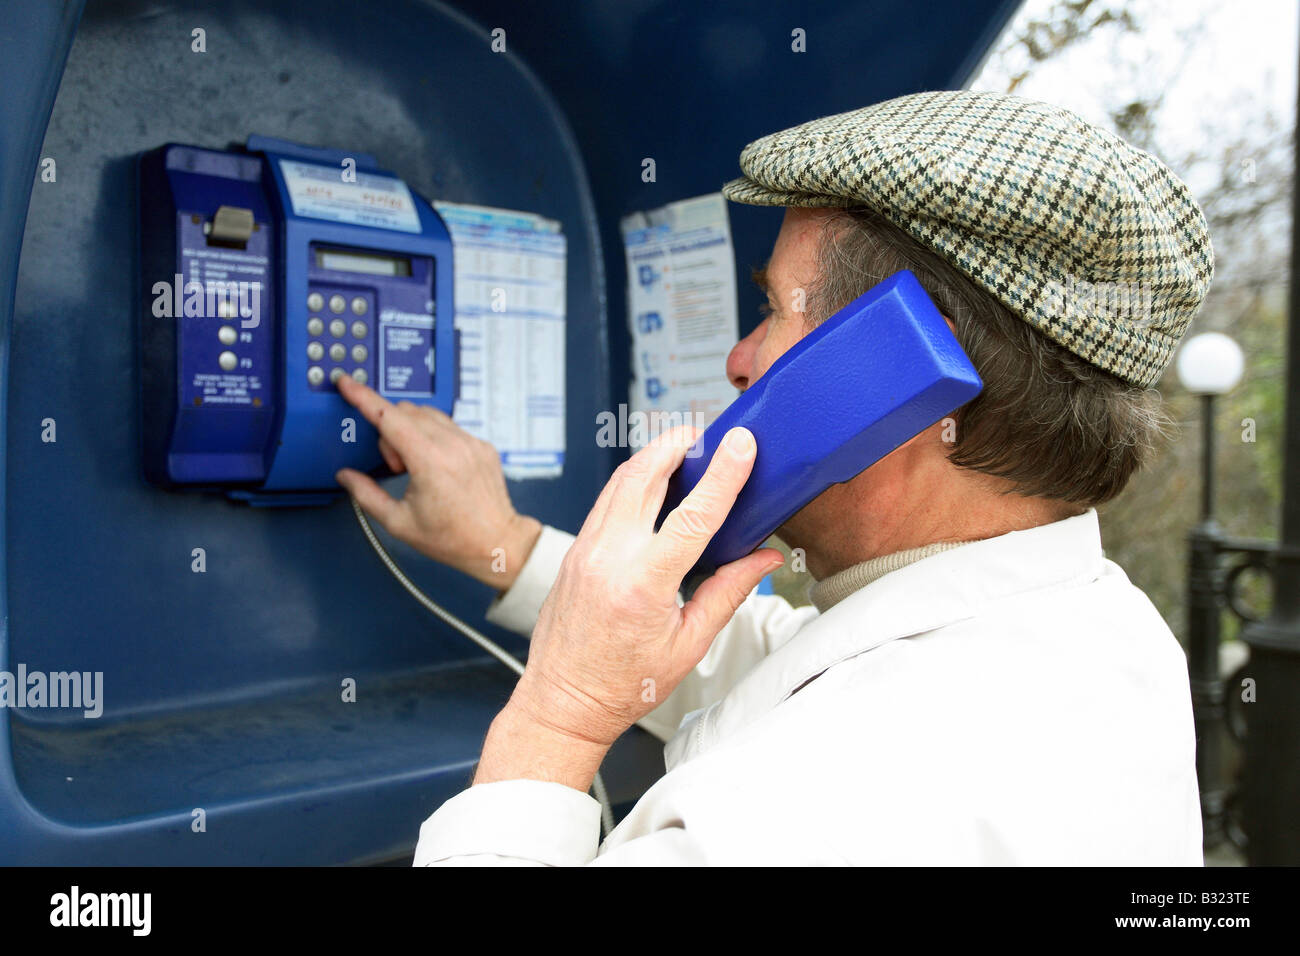 Man at a public phone booth, Yalta, Ukraine Stock Photo